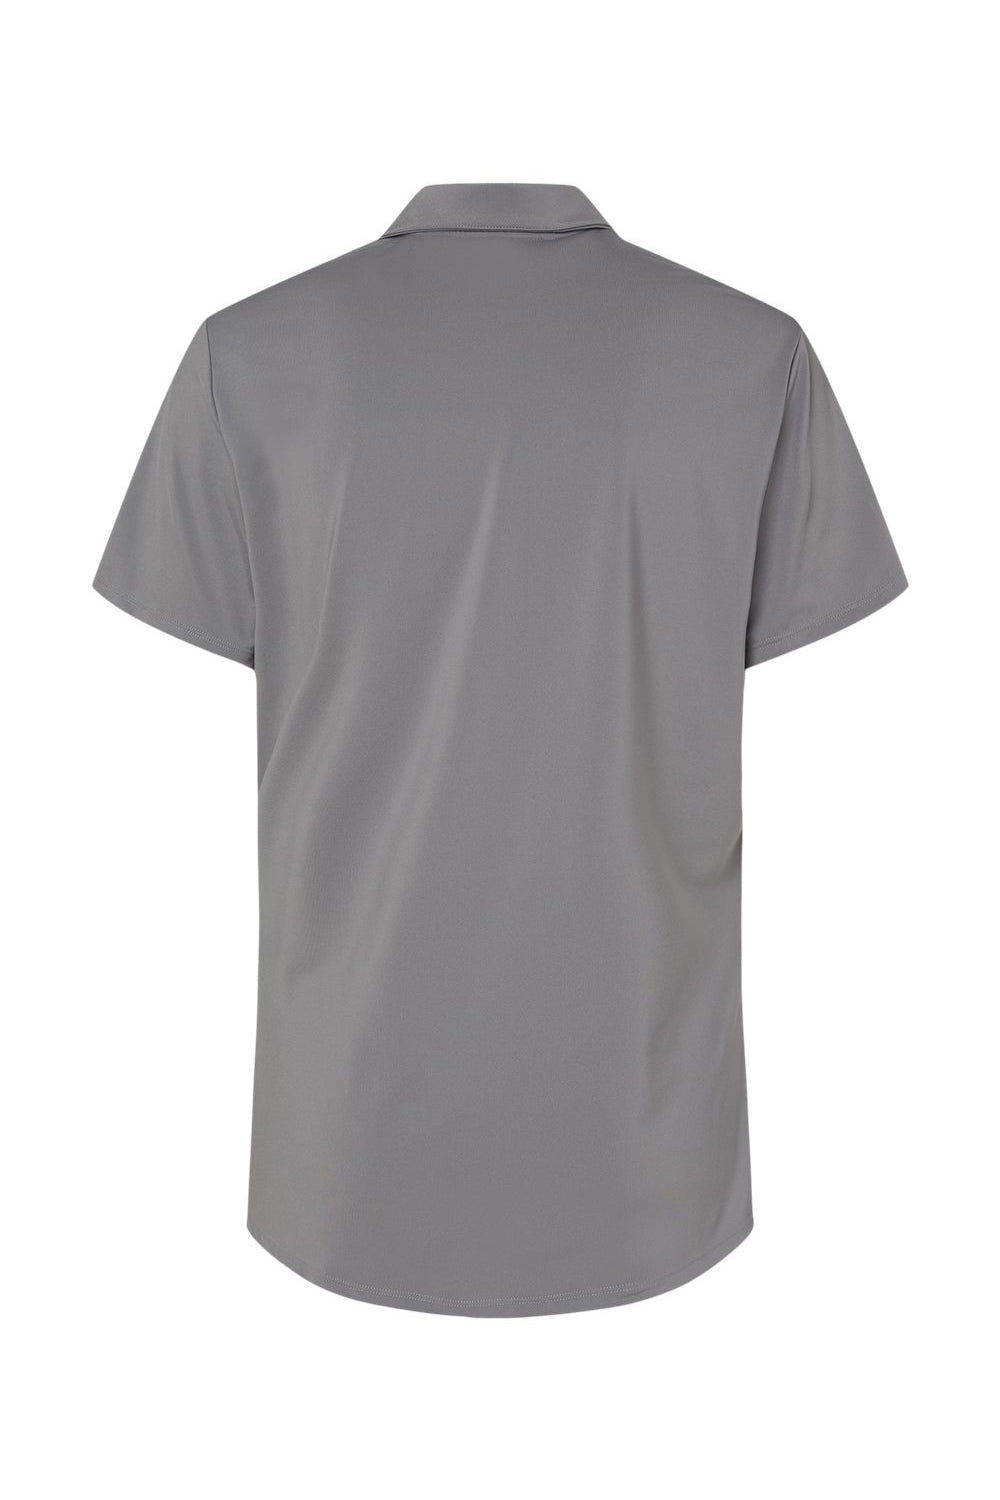 Adidas A515 Womens Ultimate Moisture Wicking Short Sleeve Polo Shirt Grey Flat Back